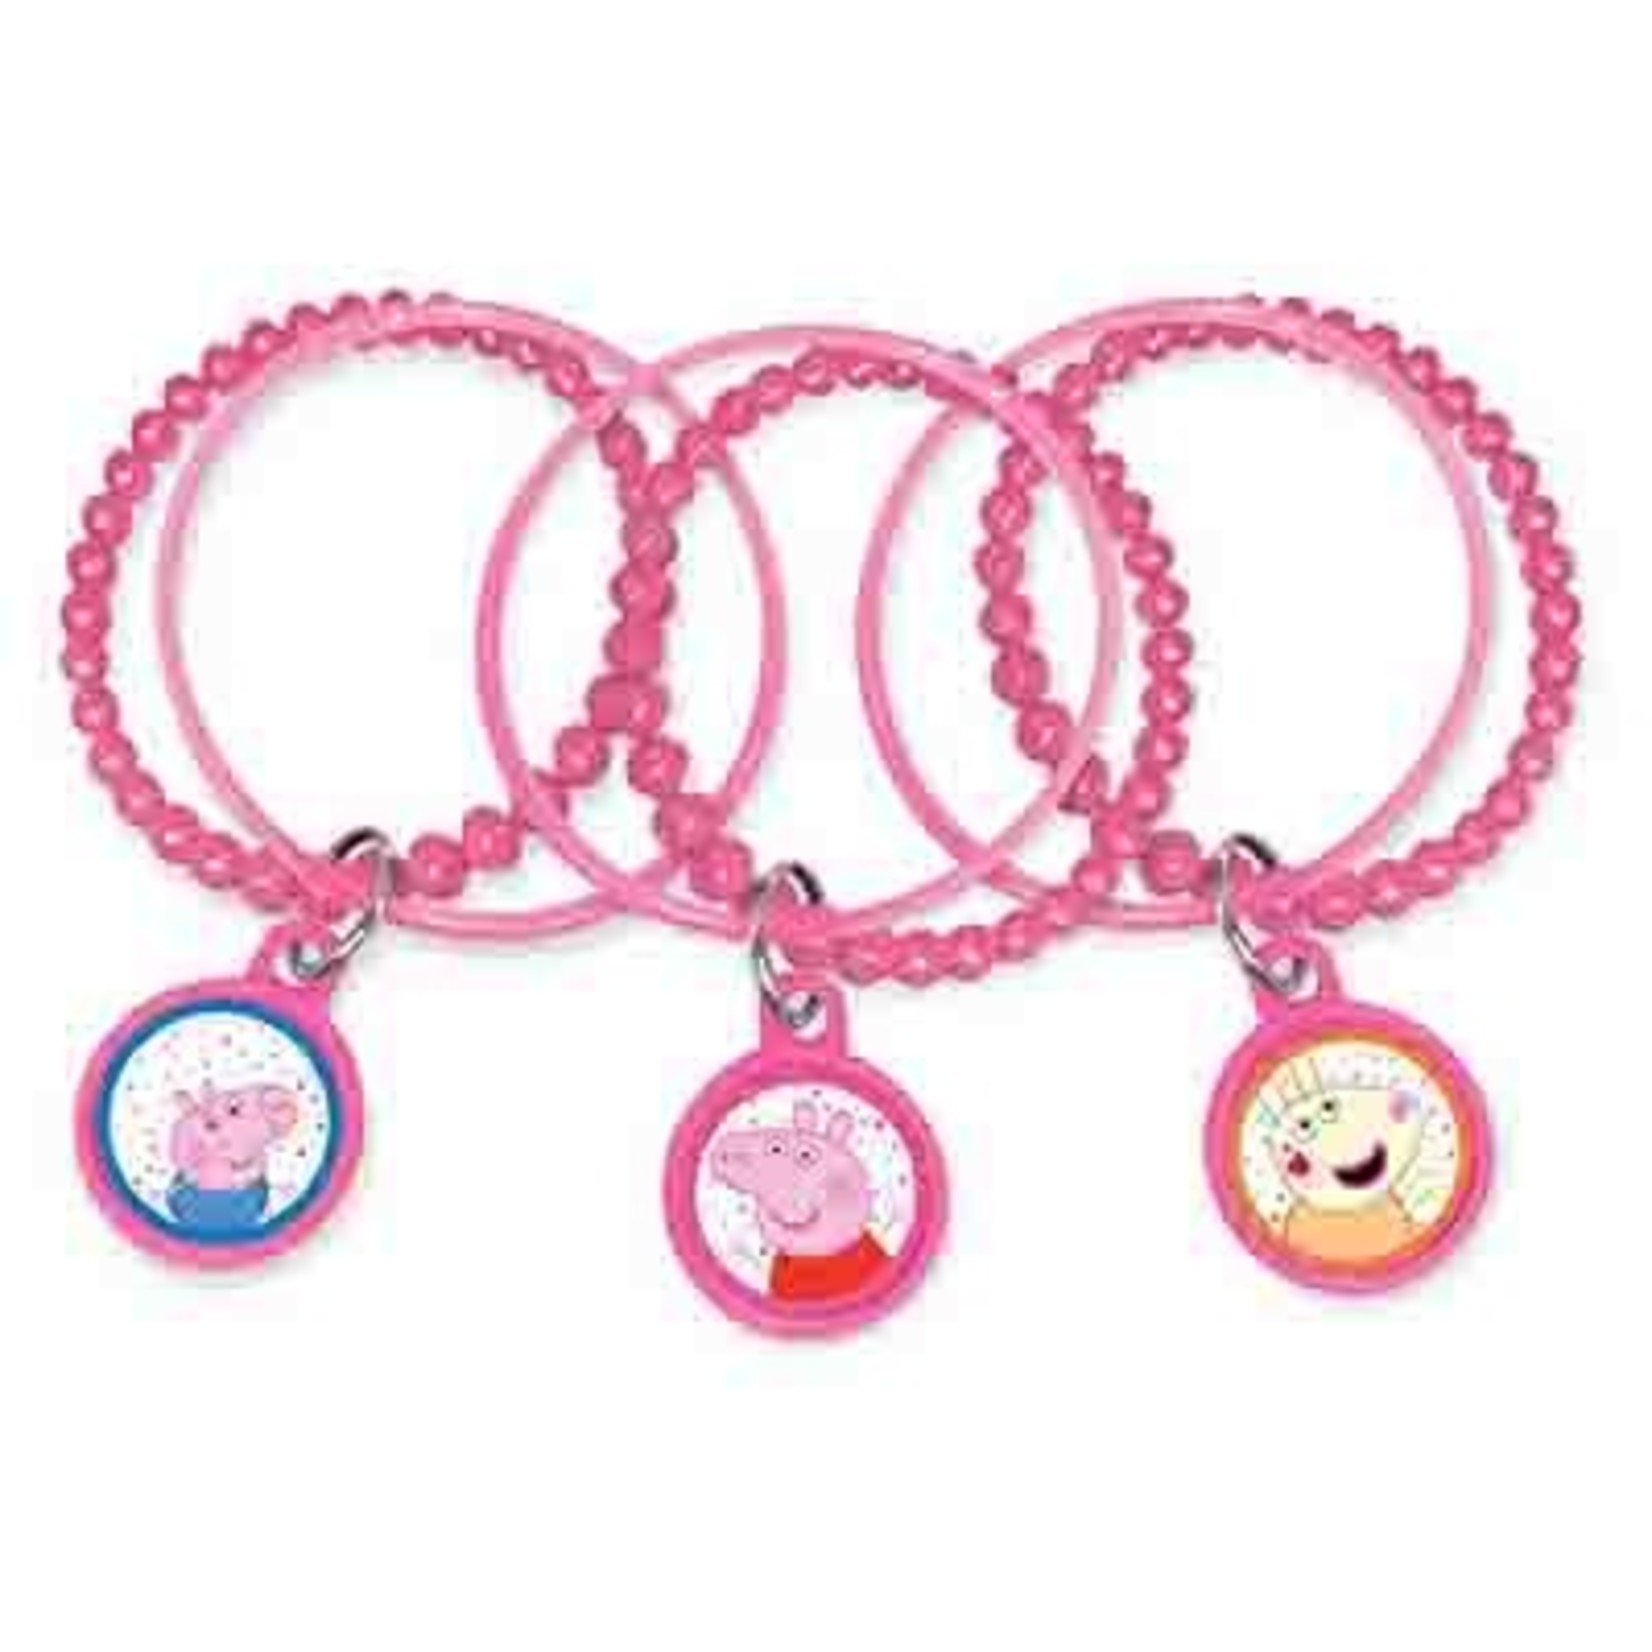 Amscan Peppa Pig Confetti Bracelet Kits - 8ct.